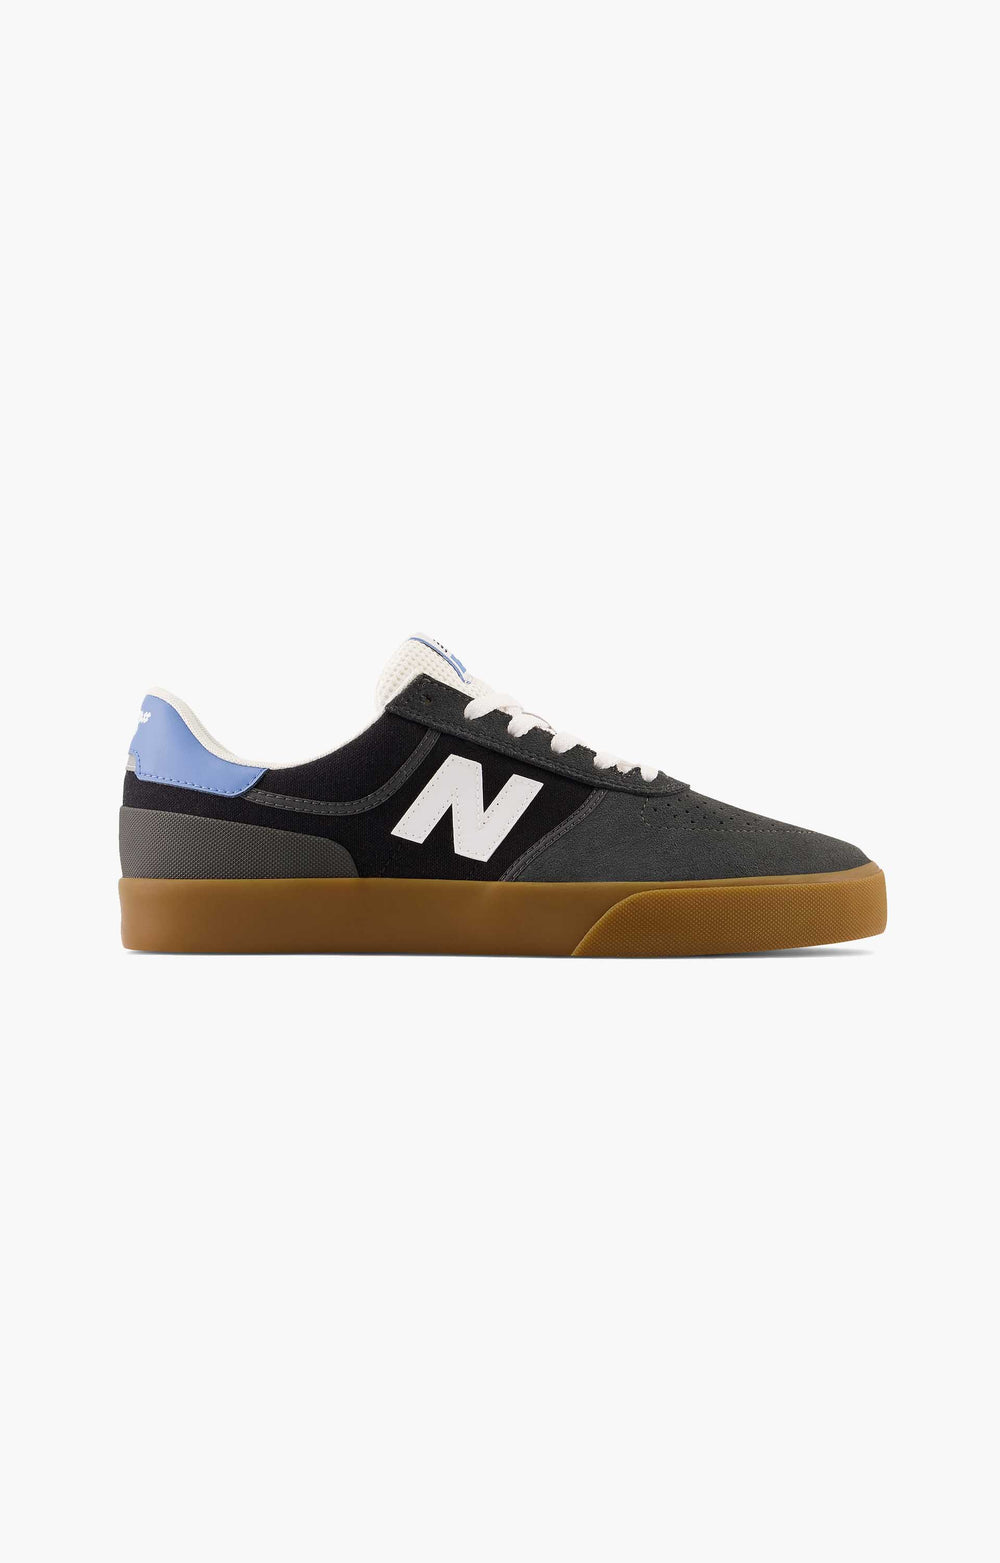 New Balance Numeric NM272GBG Shoe, Grey